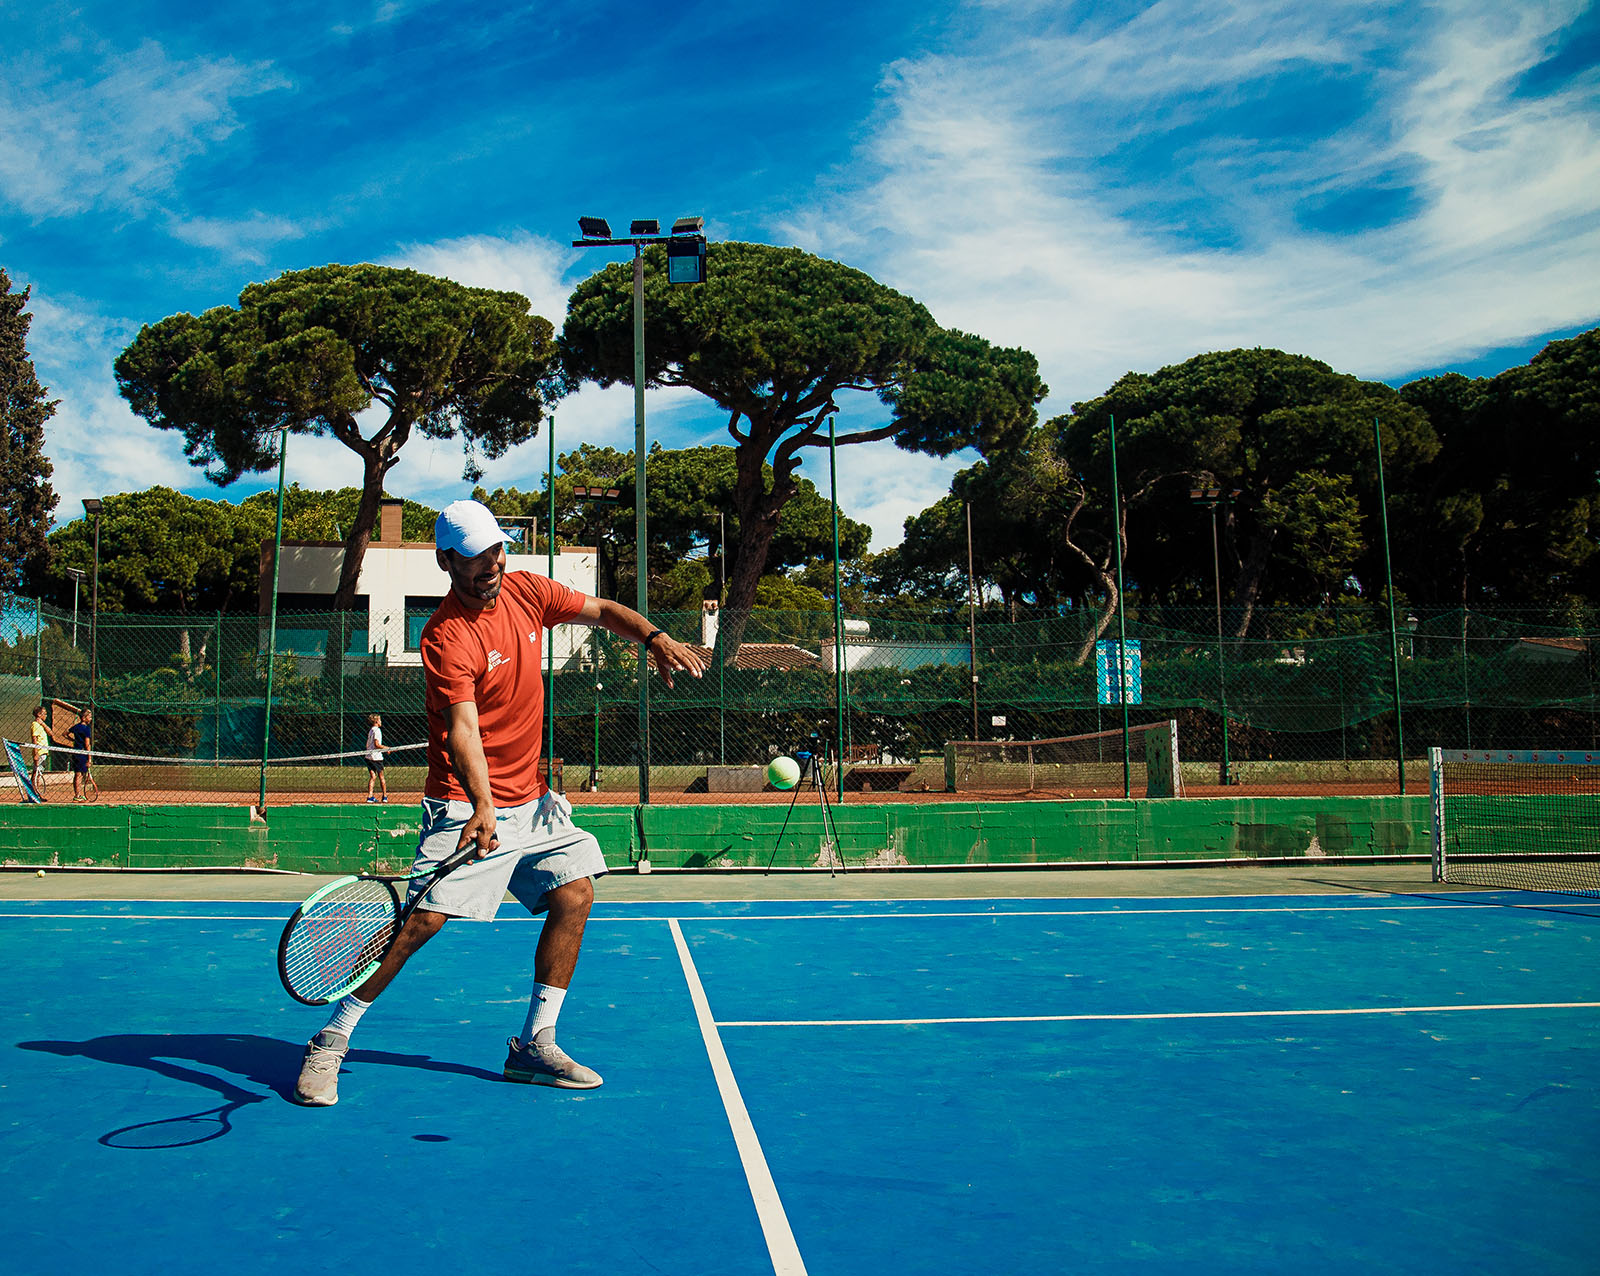 About Royal Tennis Club Marbella